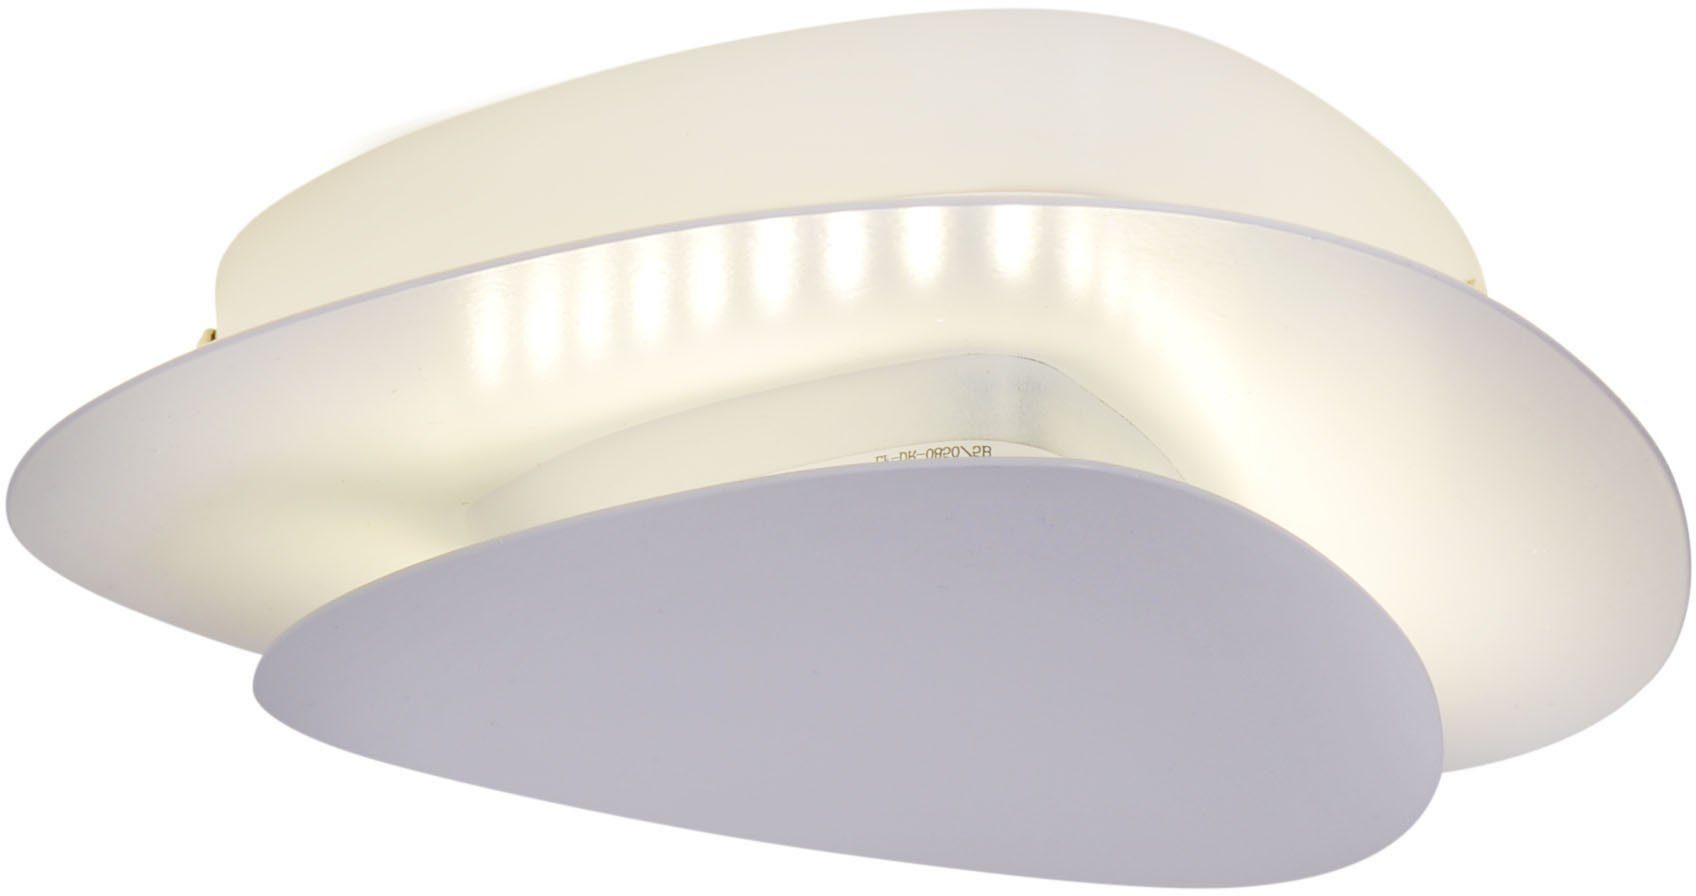 näve LED Deckenleuchte Liso, LED fest integriert, Warmweiß, Energieeffizienzklasse G, incl. Treiber, Material: Metall, Farbe: weiß